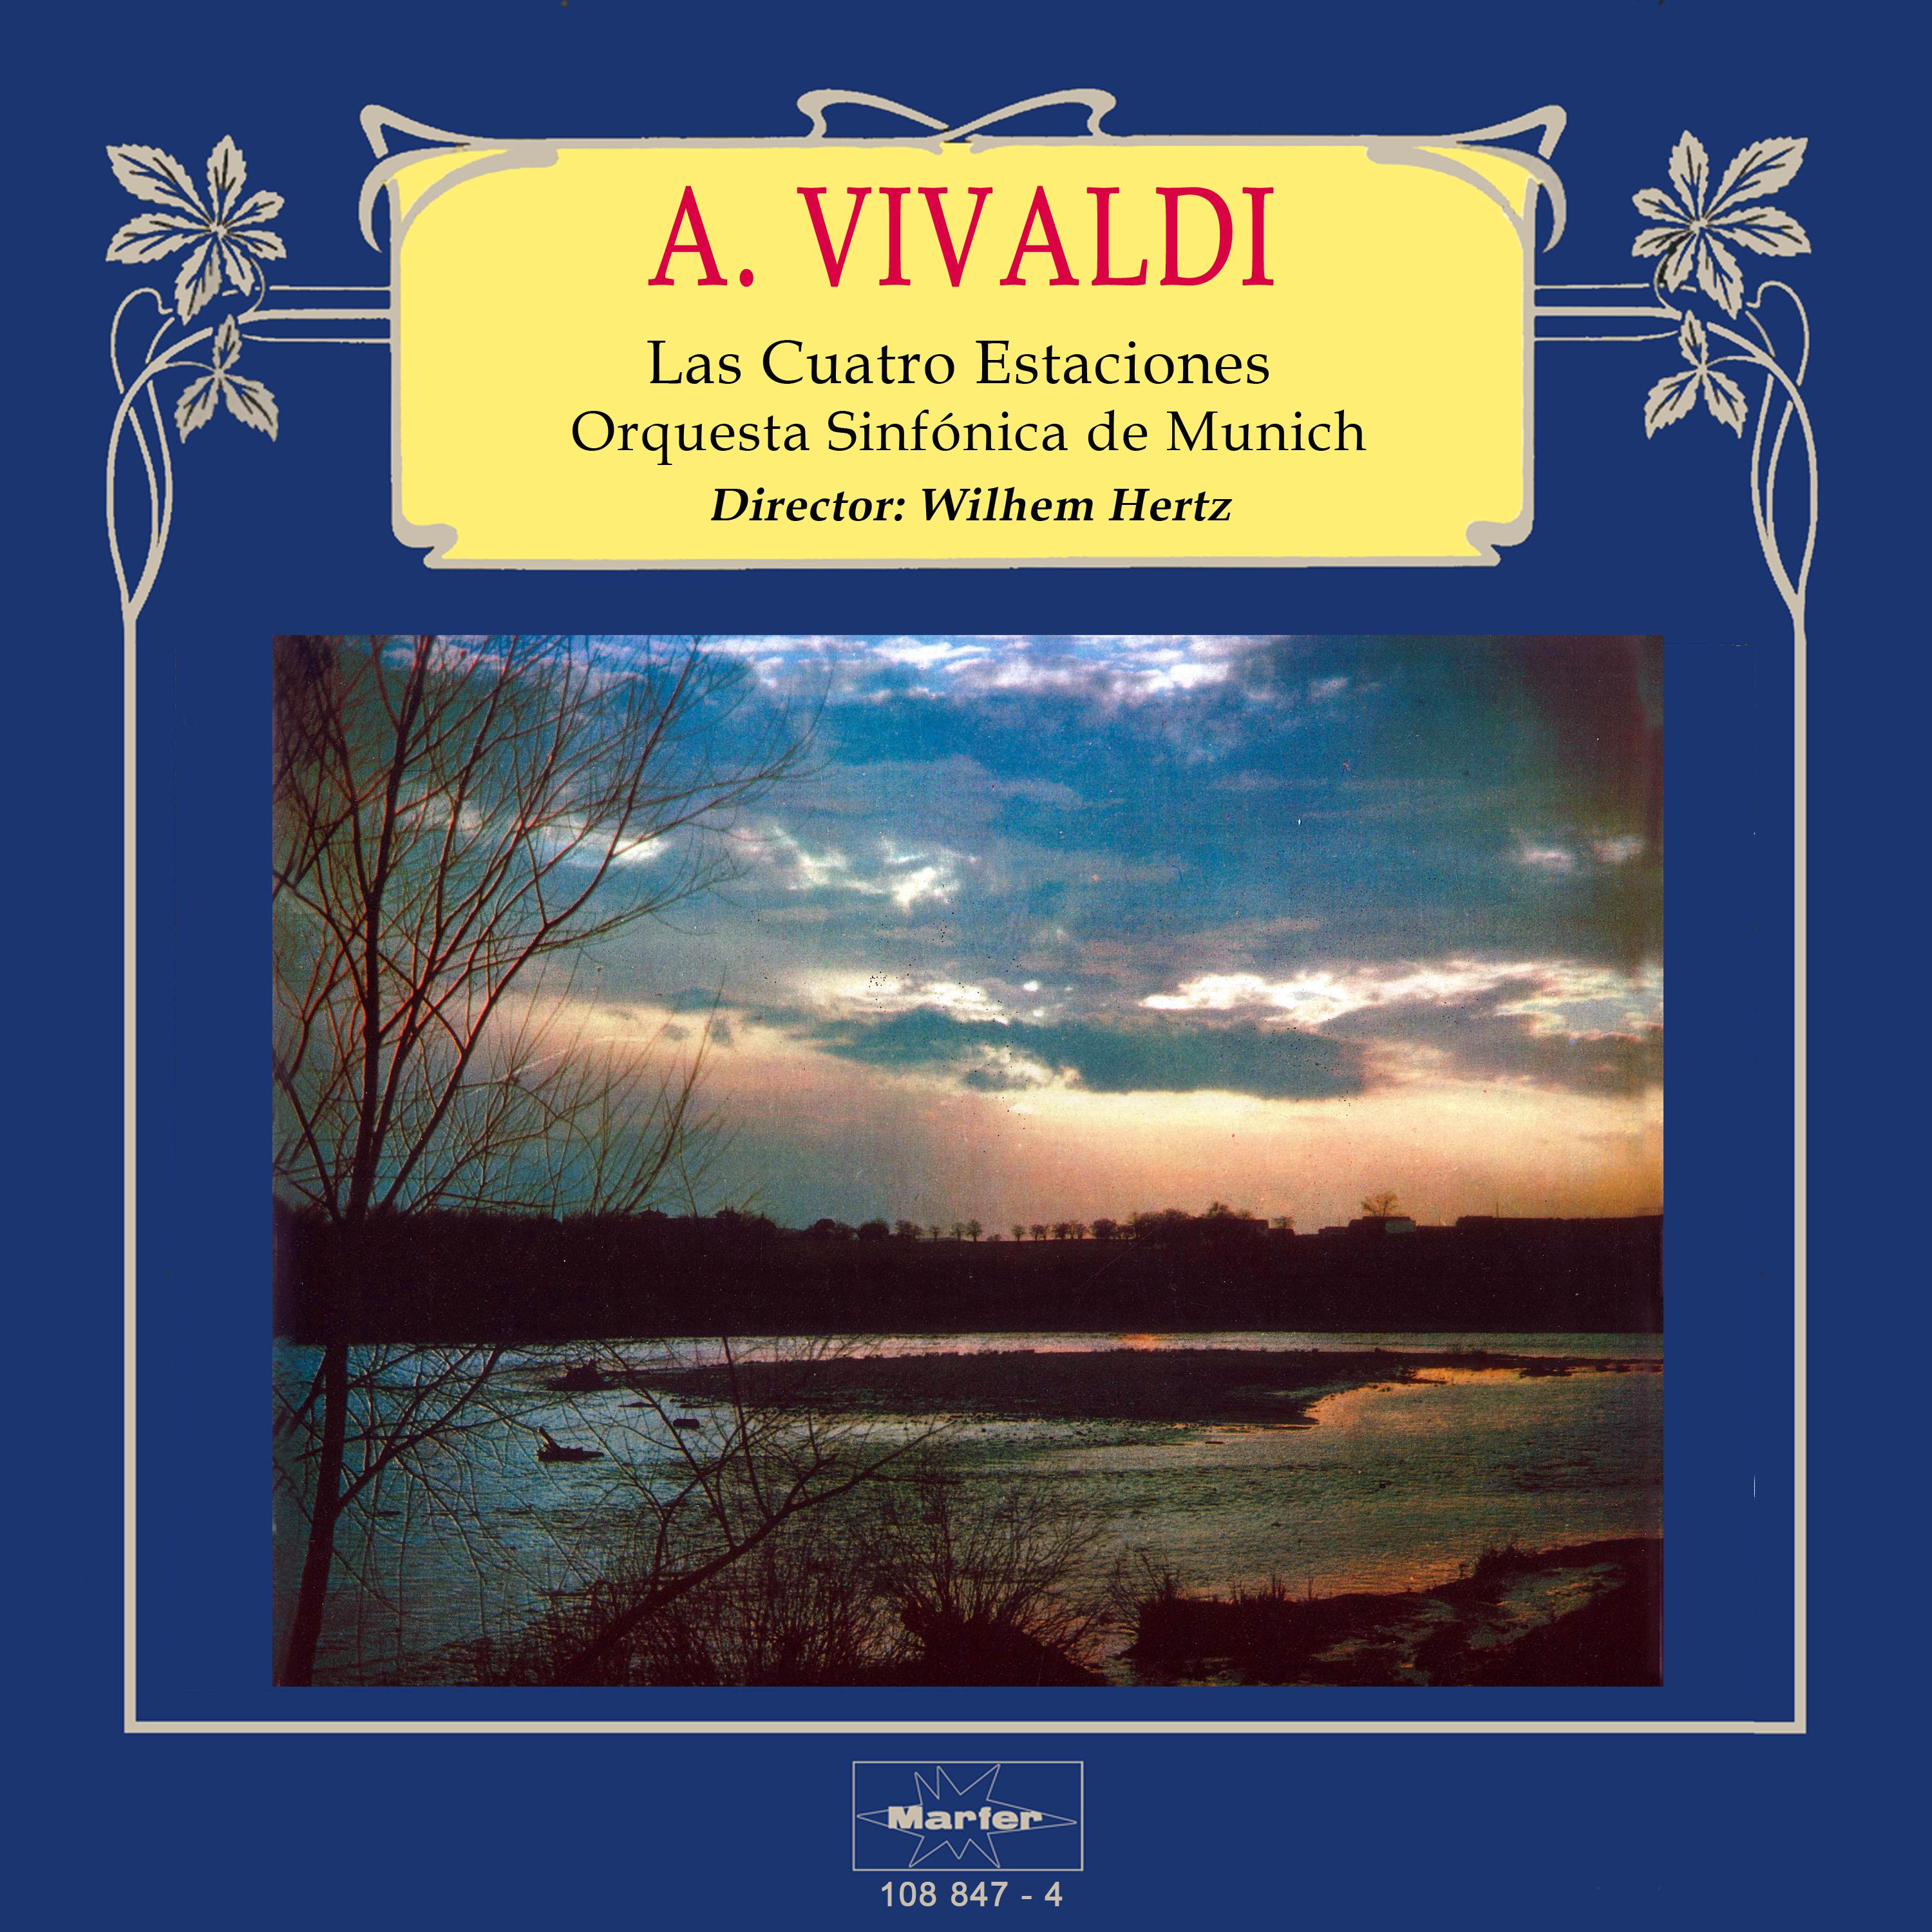 Concierto No. 1 in E Major, Op. 8, la primavera: III. Danza pastorale - Allegro